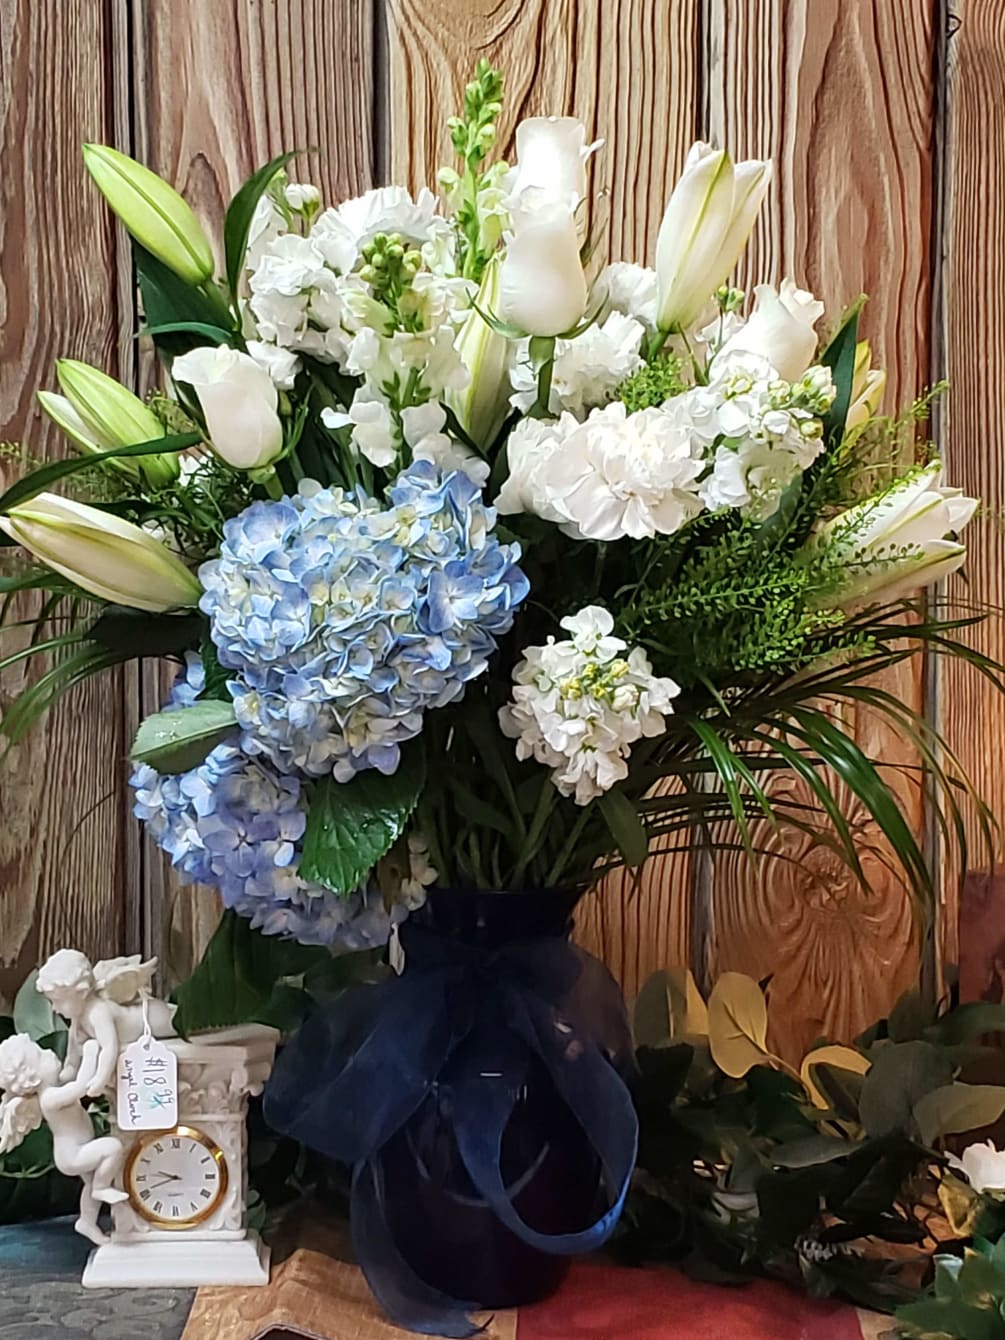 White lilies, white roses, blue hydrangeas, white stock arranged in a blue